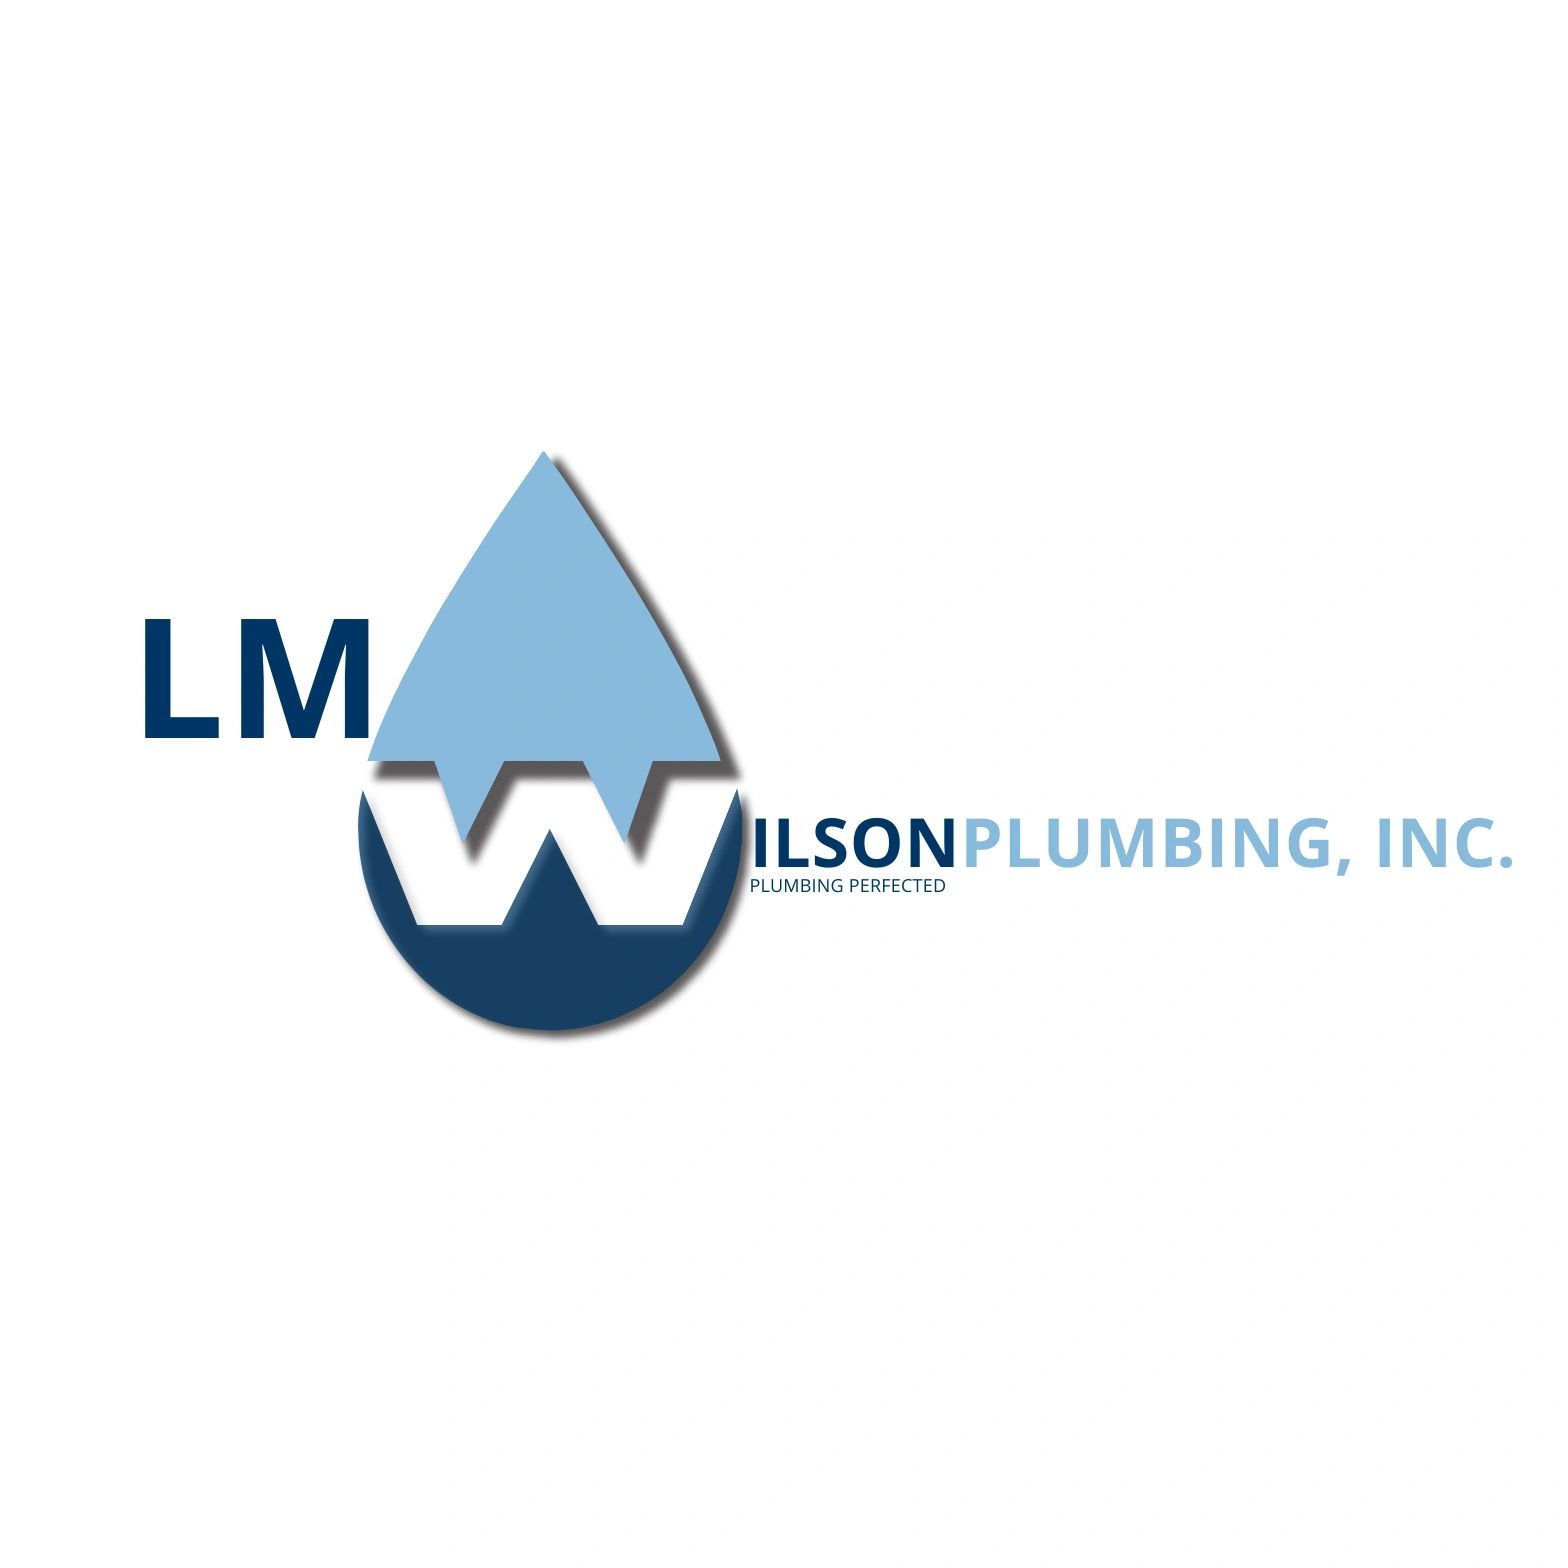 L.M Wilson Plumbing Logo